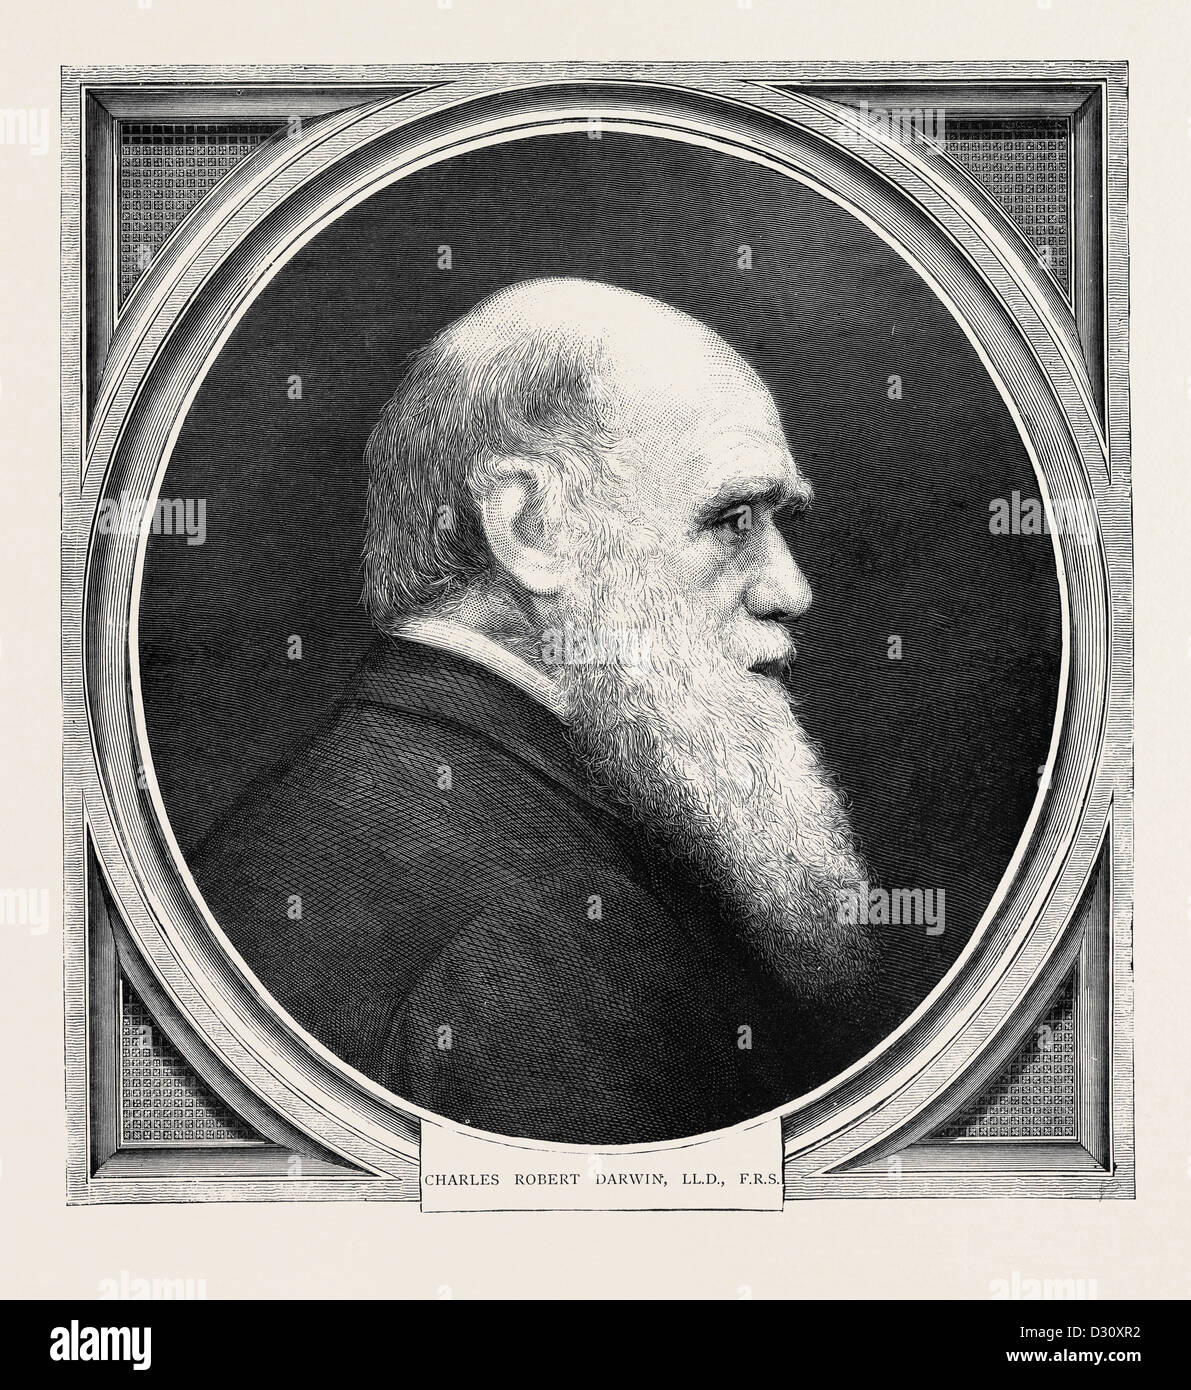 CHARLES ROBERT DARWIN, LL. D., F.R.S., GEBOREN 12. FEBRUAR 1809; 19. APRIL 1882 STARB Stockfoto